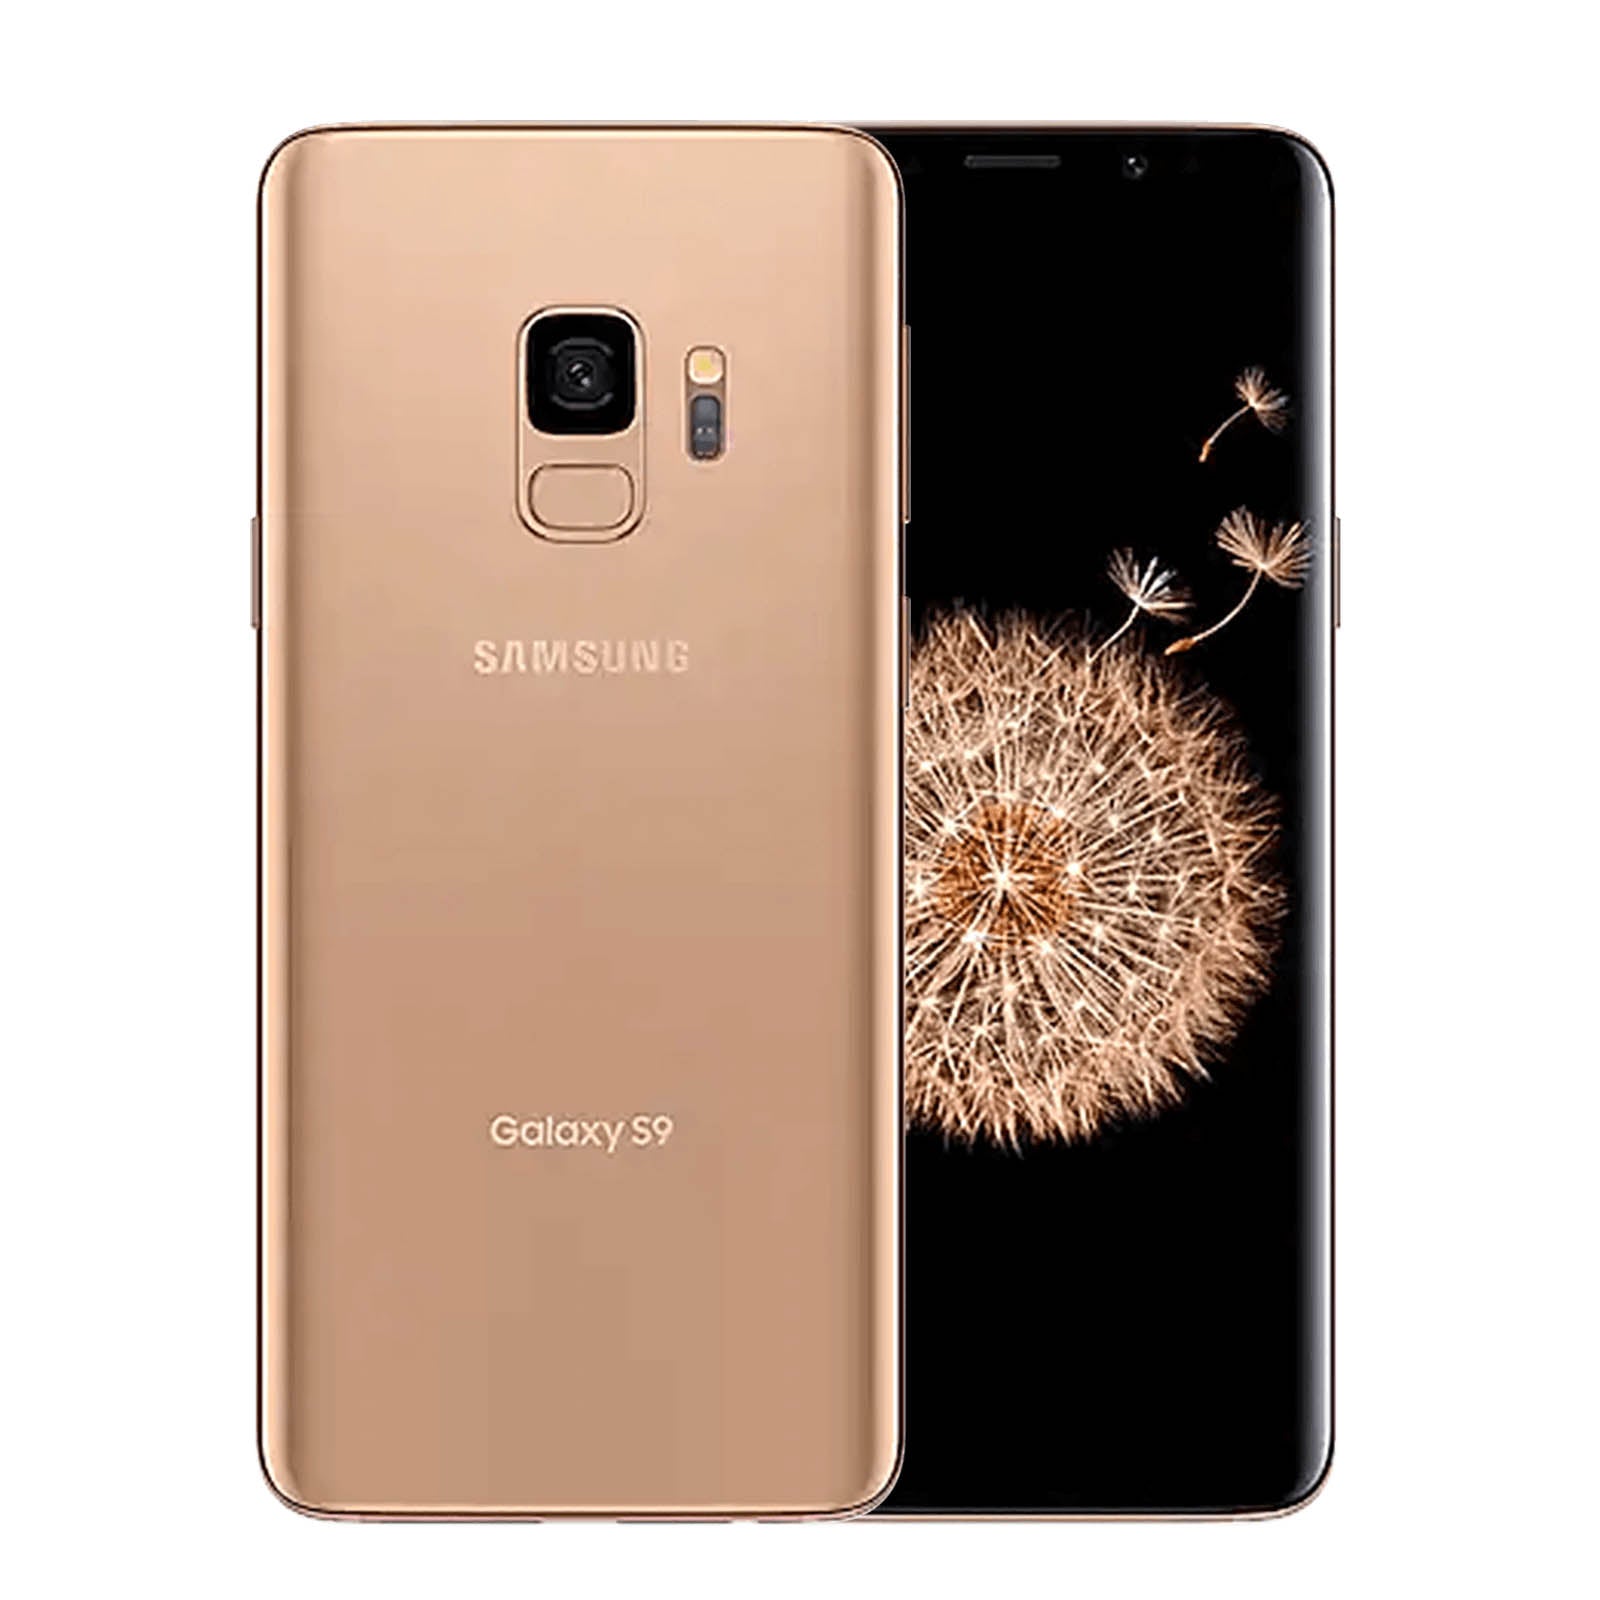 Samsung Galaxy S9 256GB Gold Very good - Unlocked